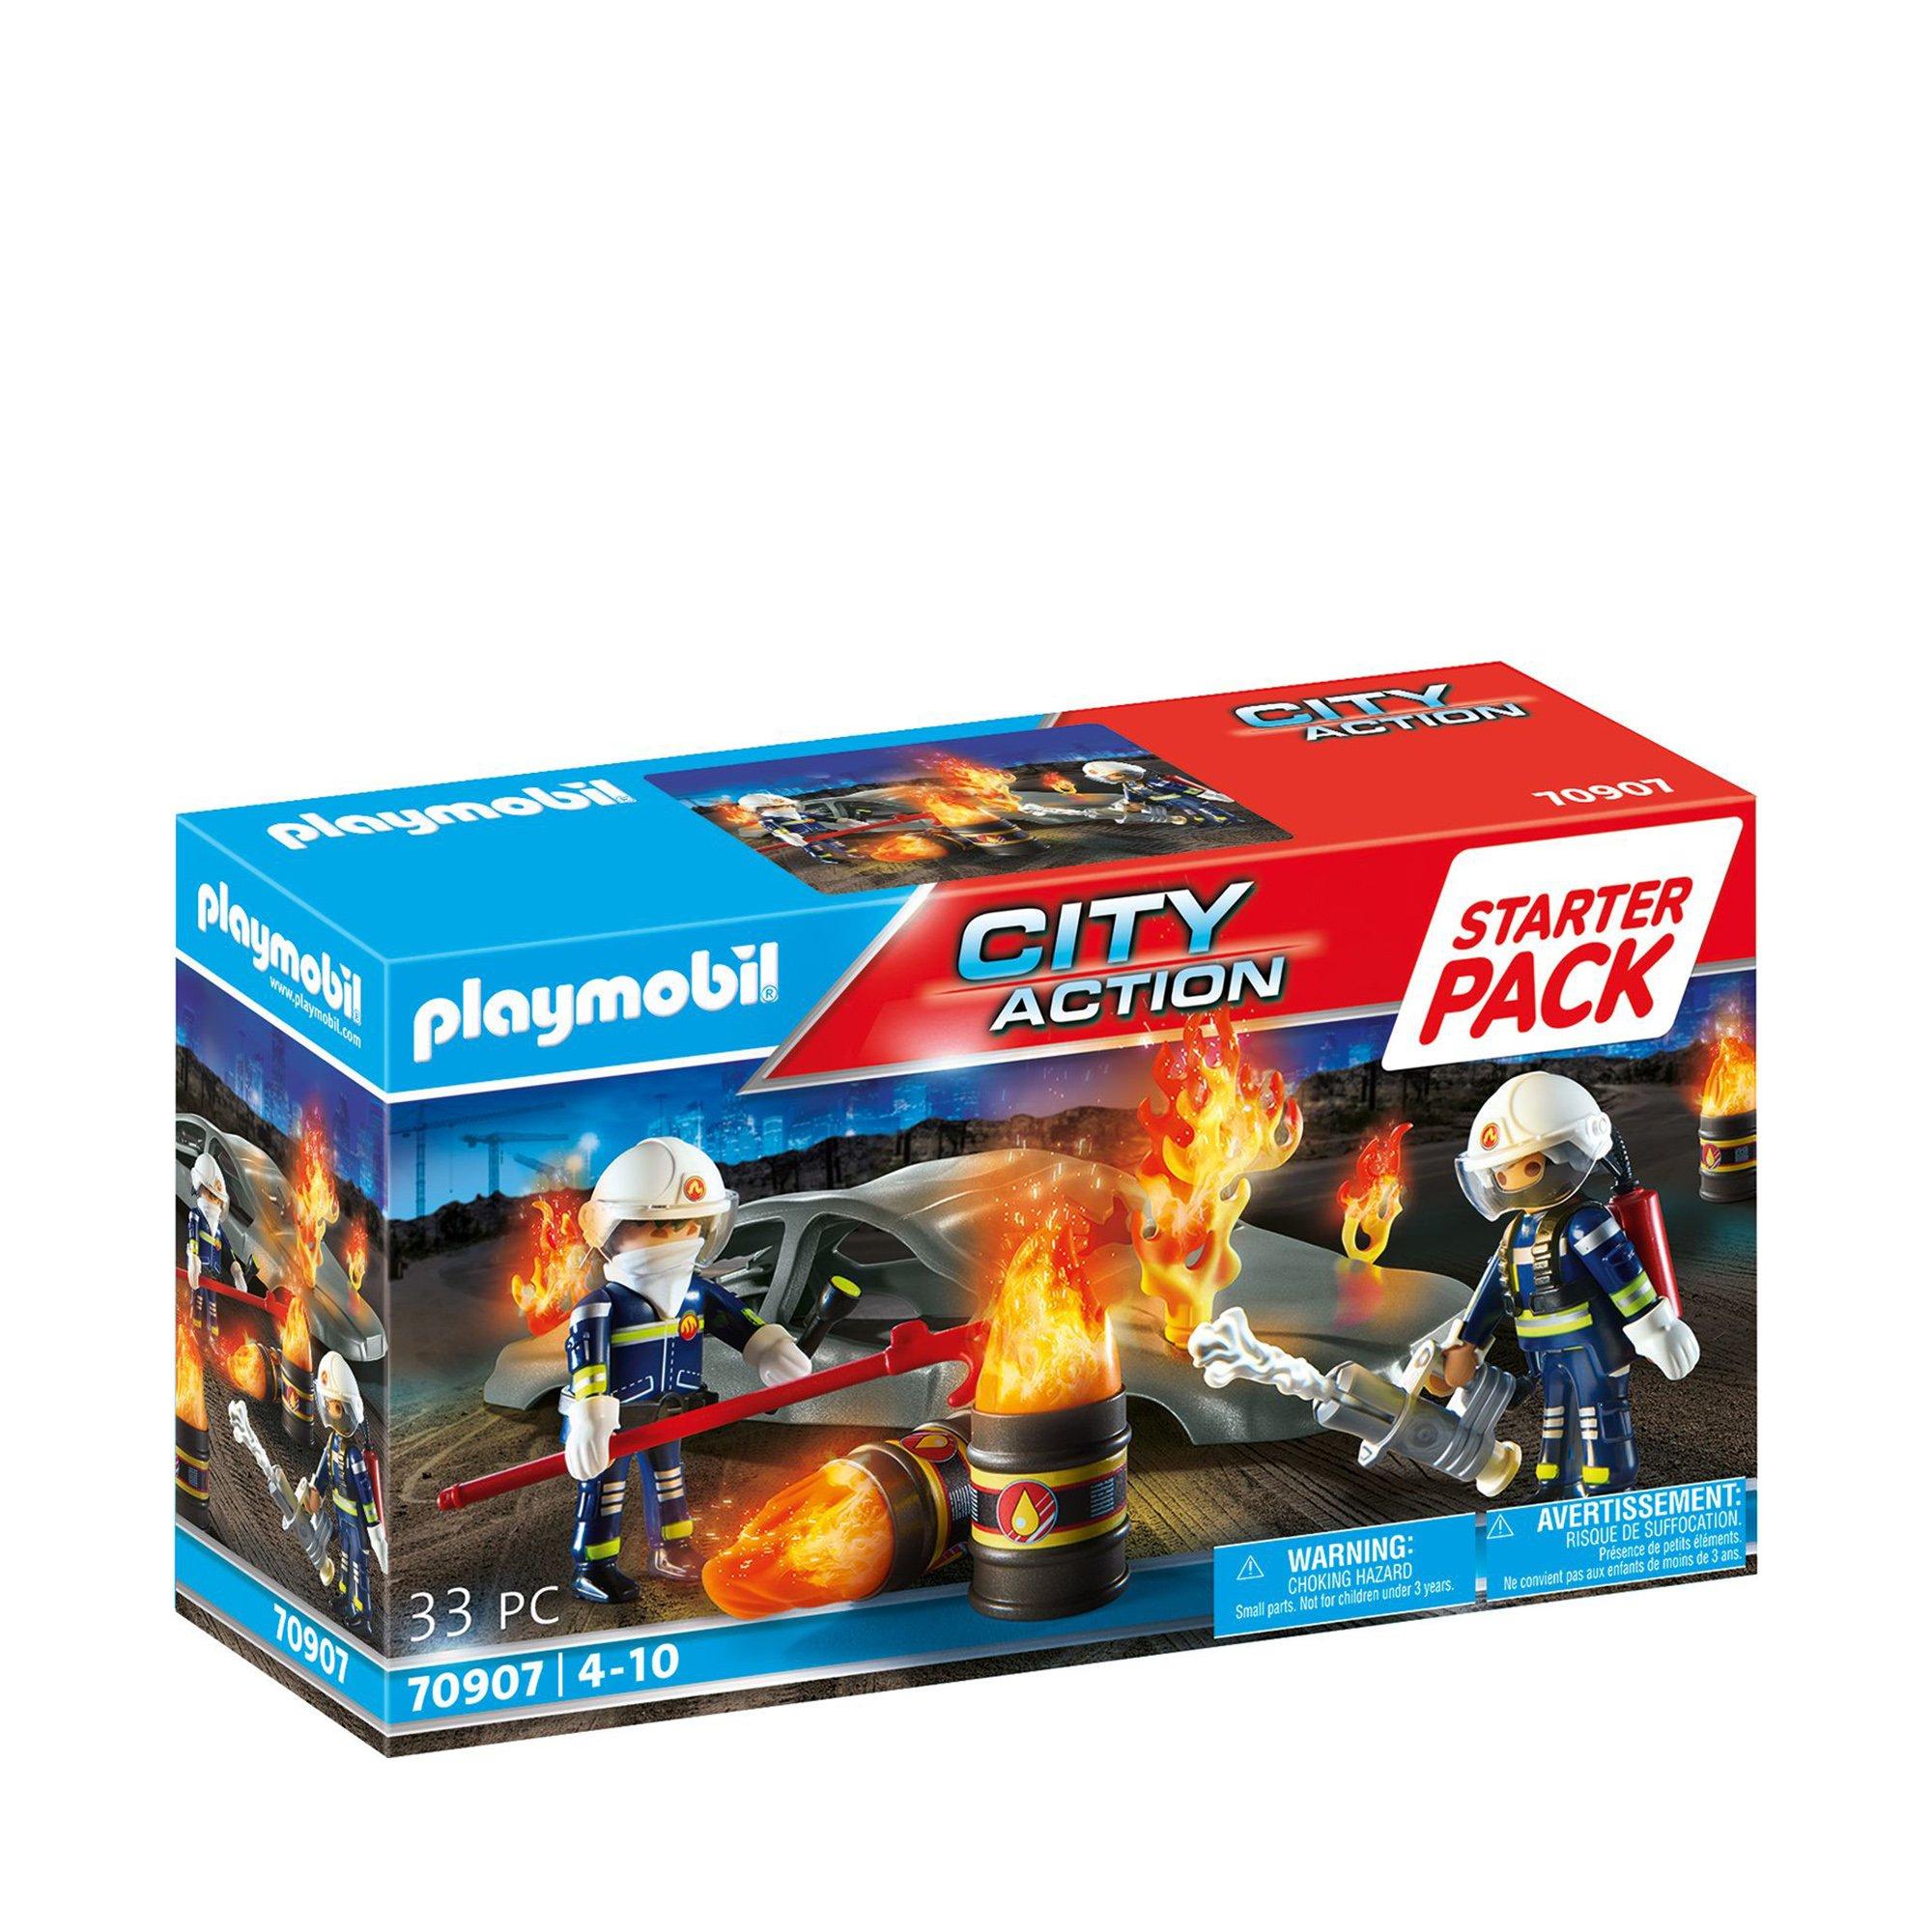 Playmobil personnage pompier - playmobil